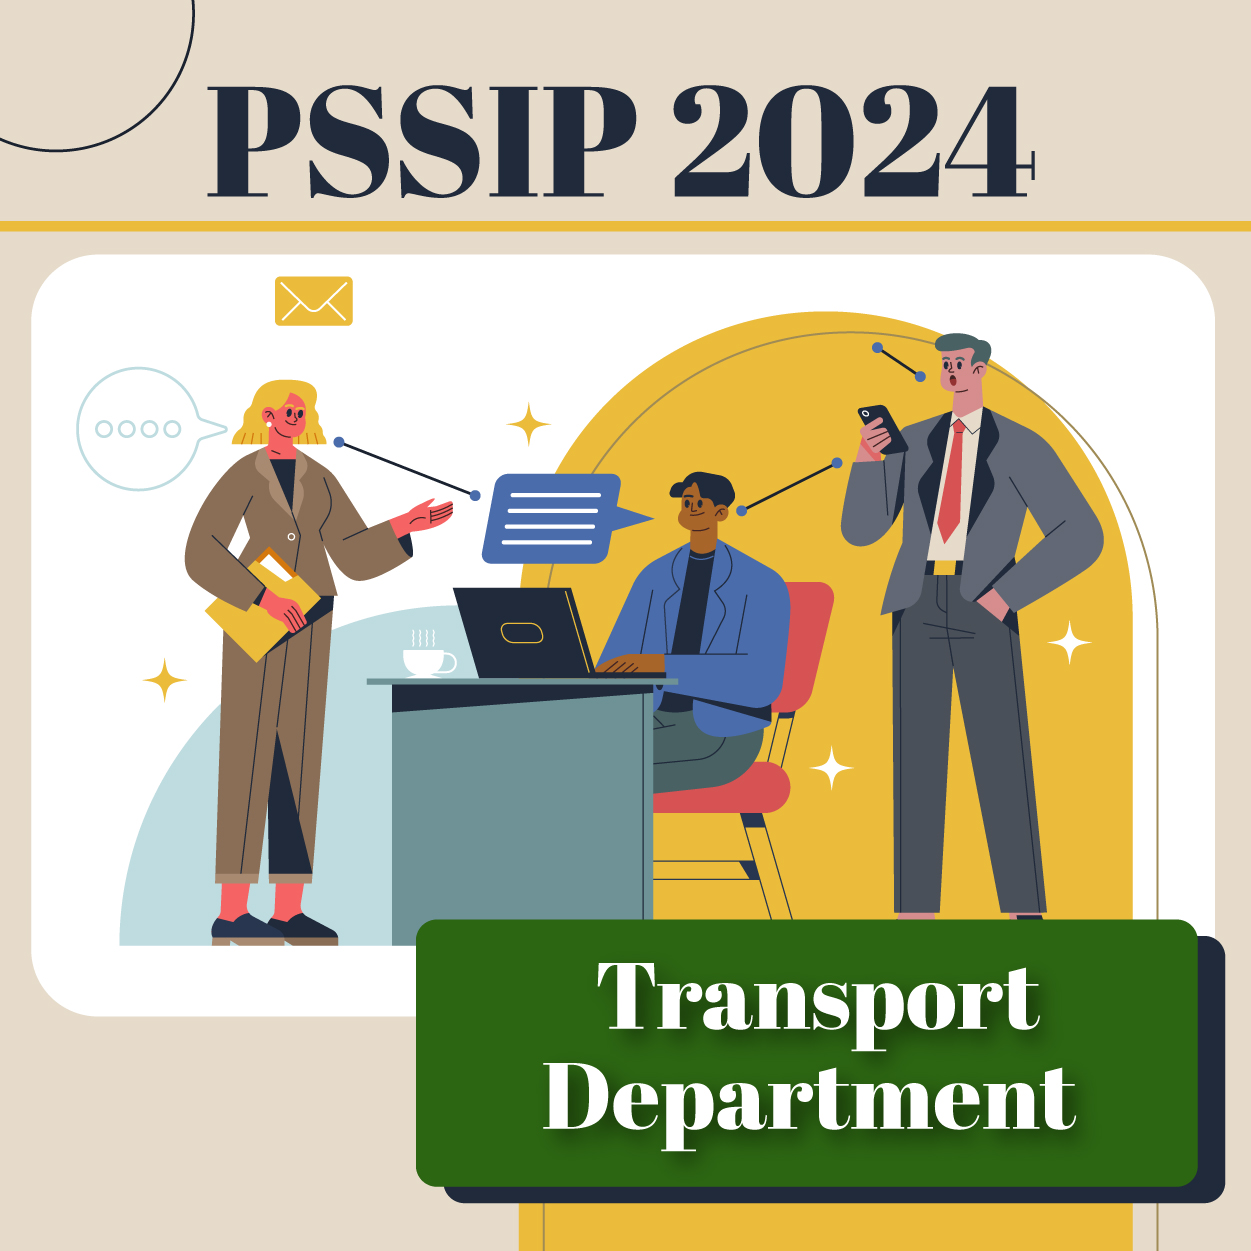 PSSIP2024 – Transport Department